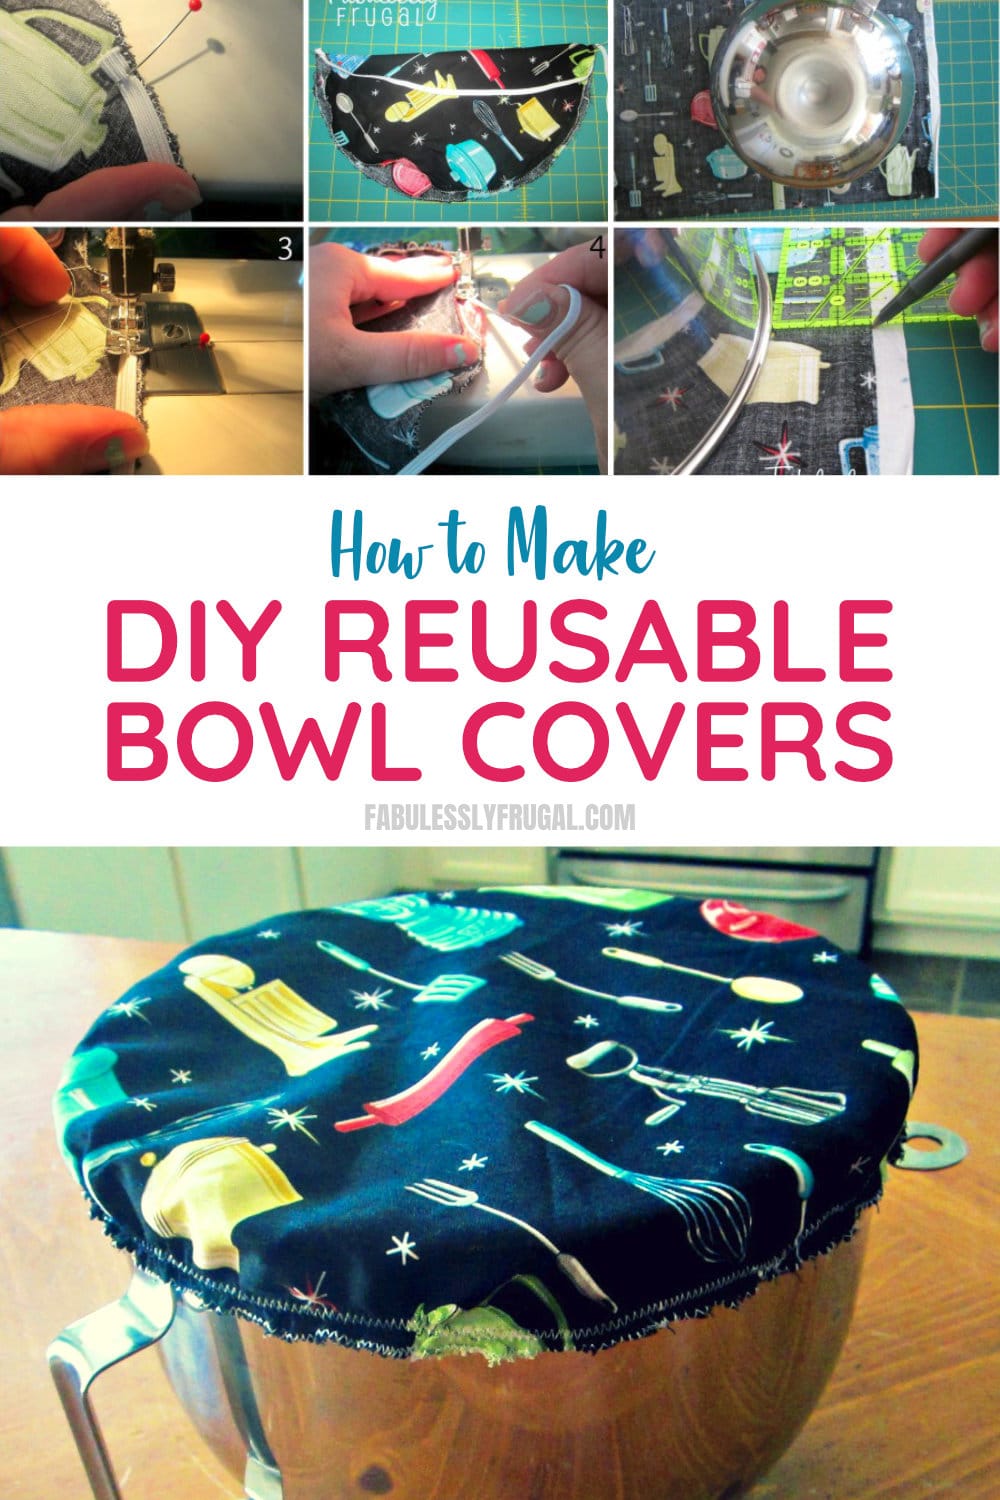 How to make DIY reusable bowl covers